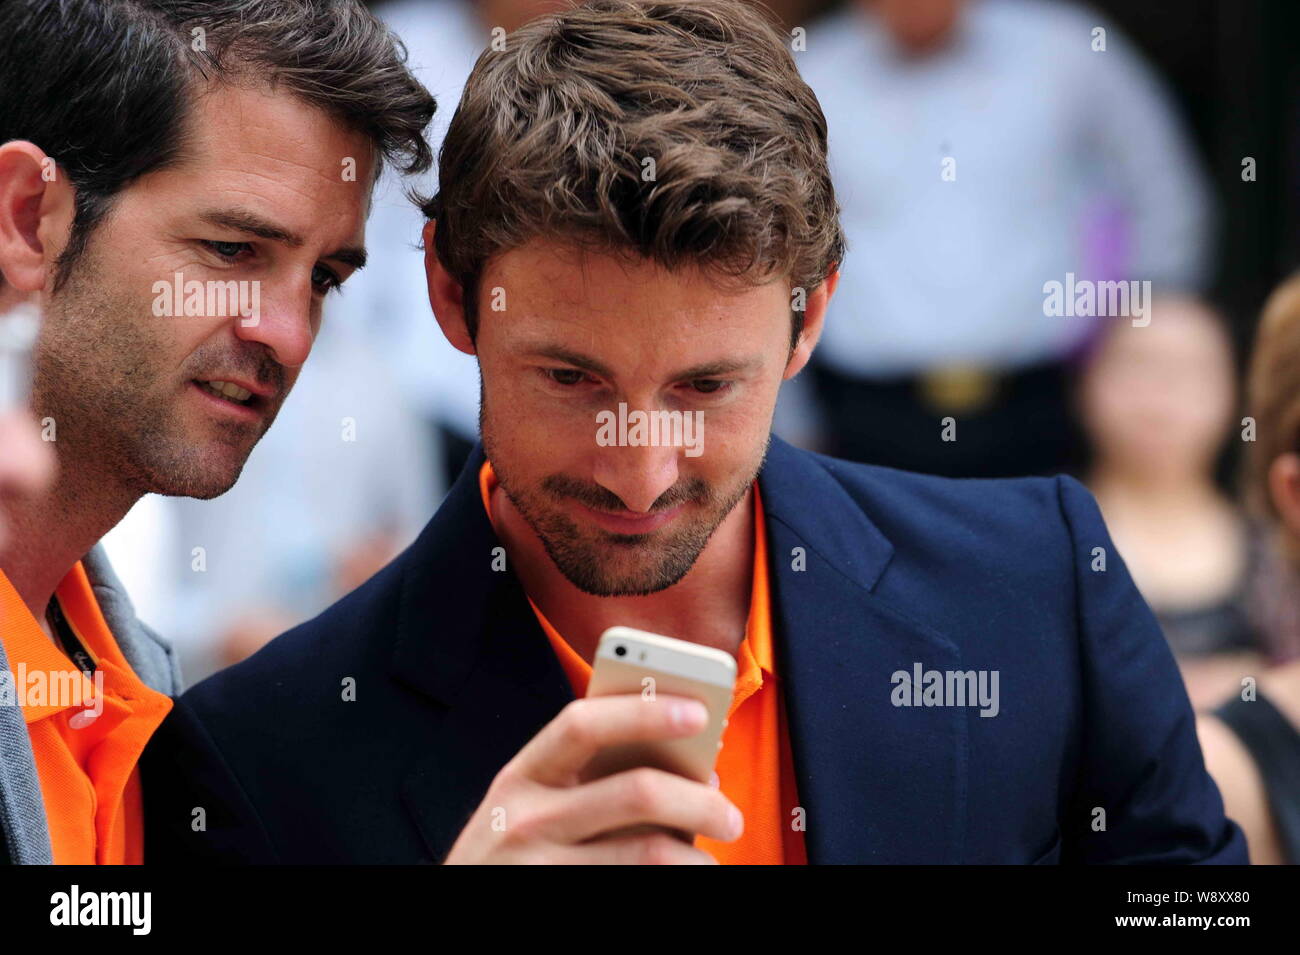 Spanish tennis player Juan Carlos Ferrero, right, uses an Apple iPhone 5S smartphone during the launch ceremony for Grand Gemdale-JC Ferrero Internati Stock Photo